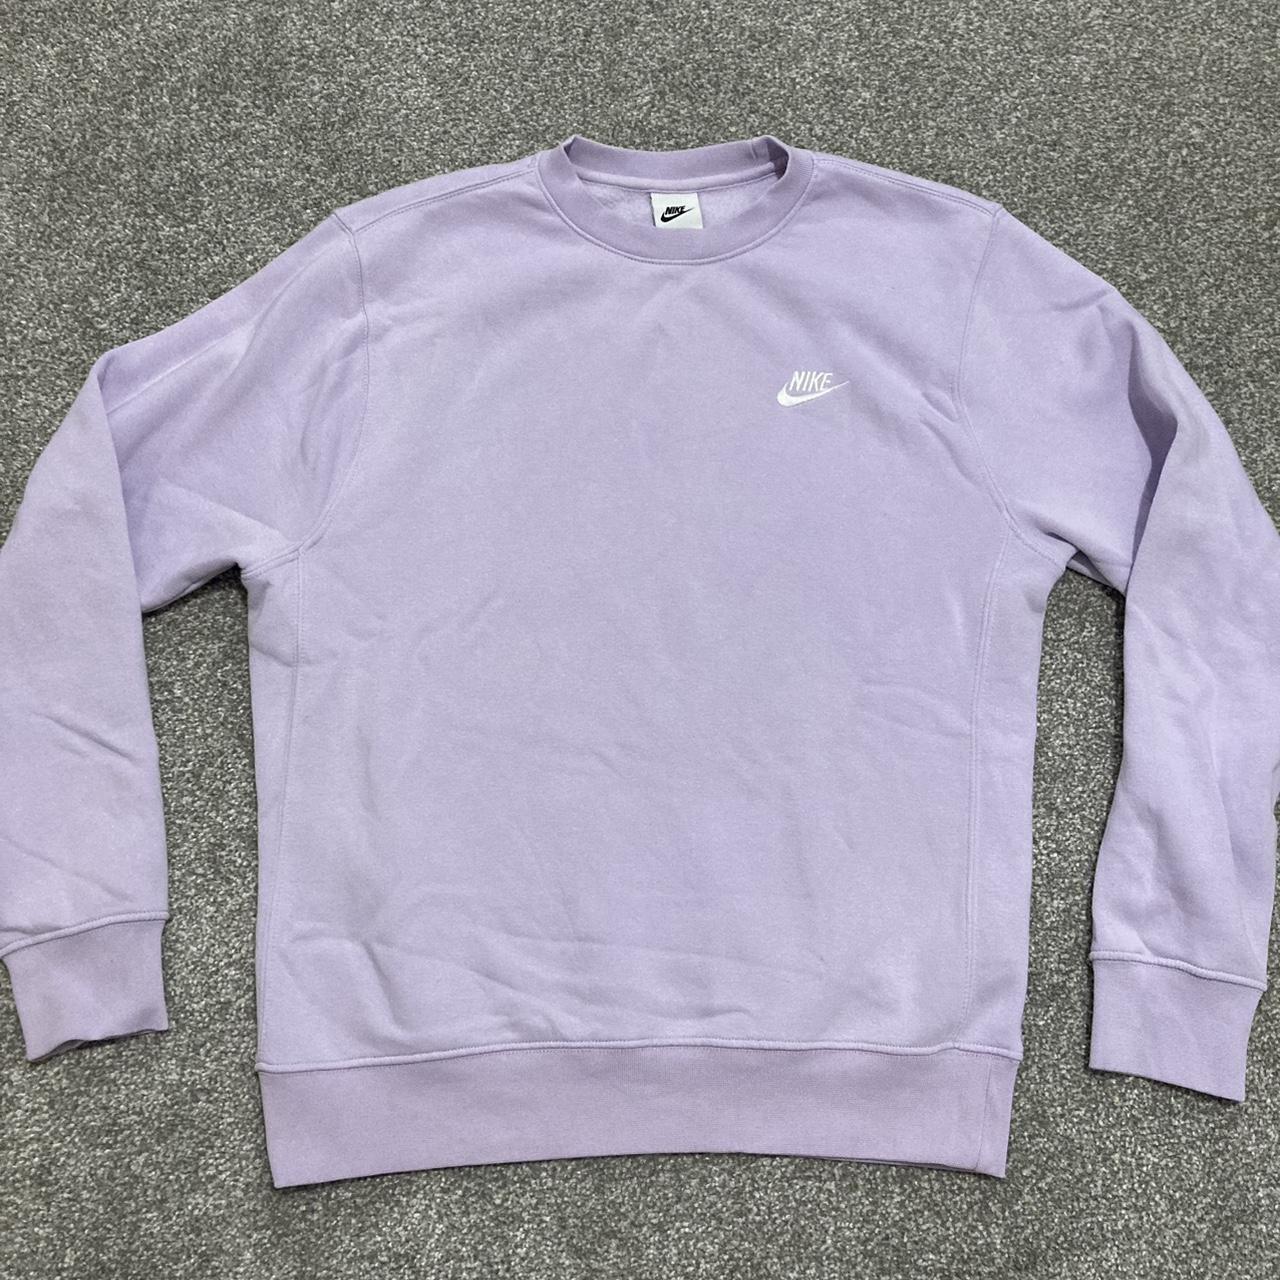 Nike Lilac Sweatshirt Condition - Excellent,... - Depop